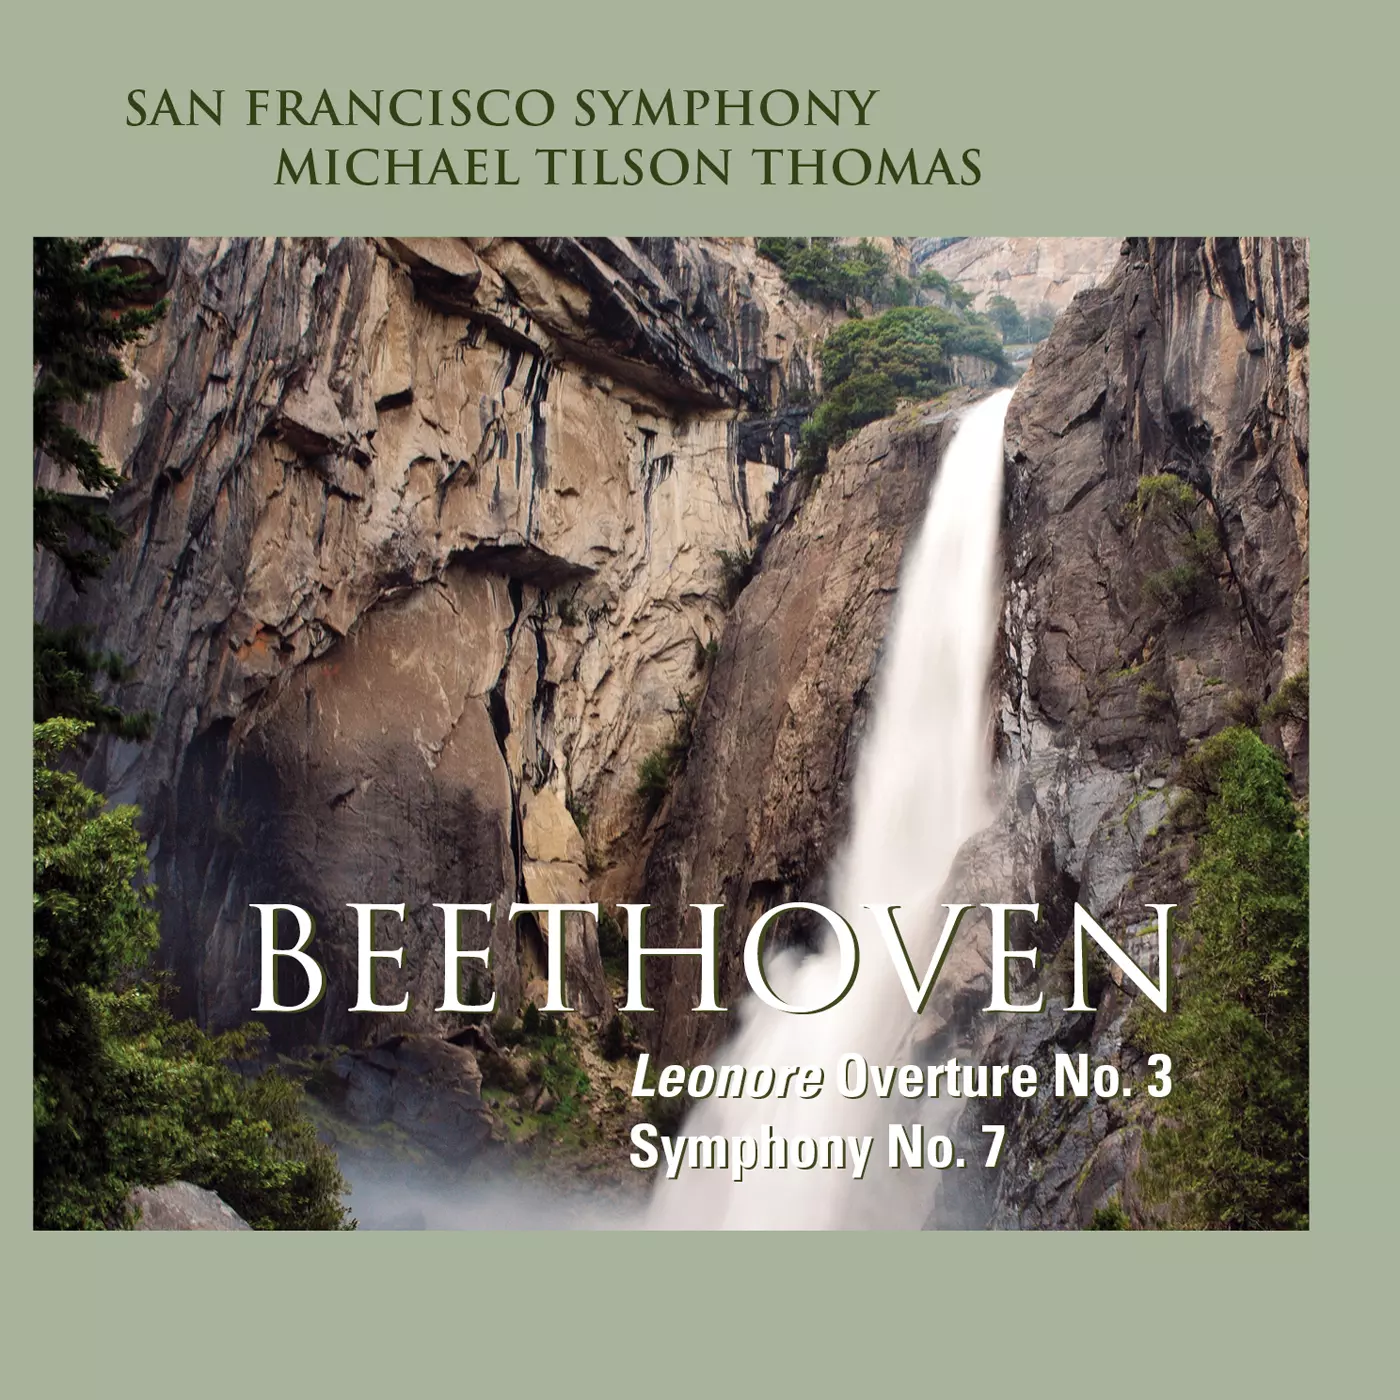 Beethoven: Leonore Overture No. 3 & Symphony No. 7